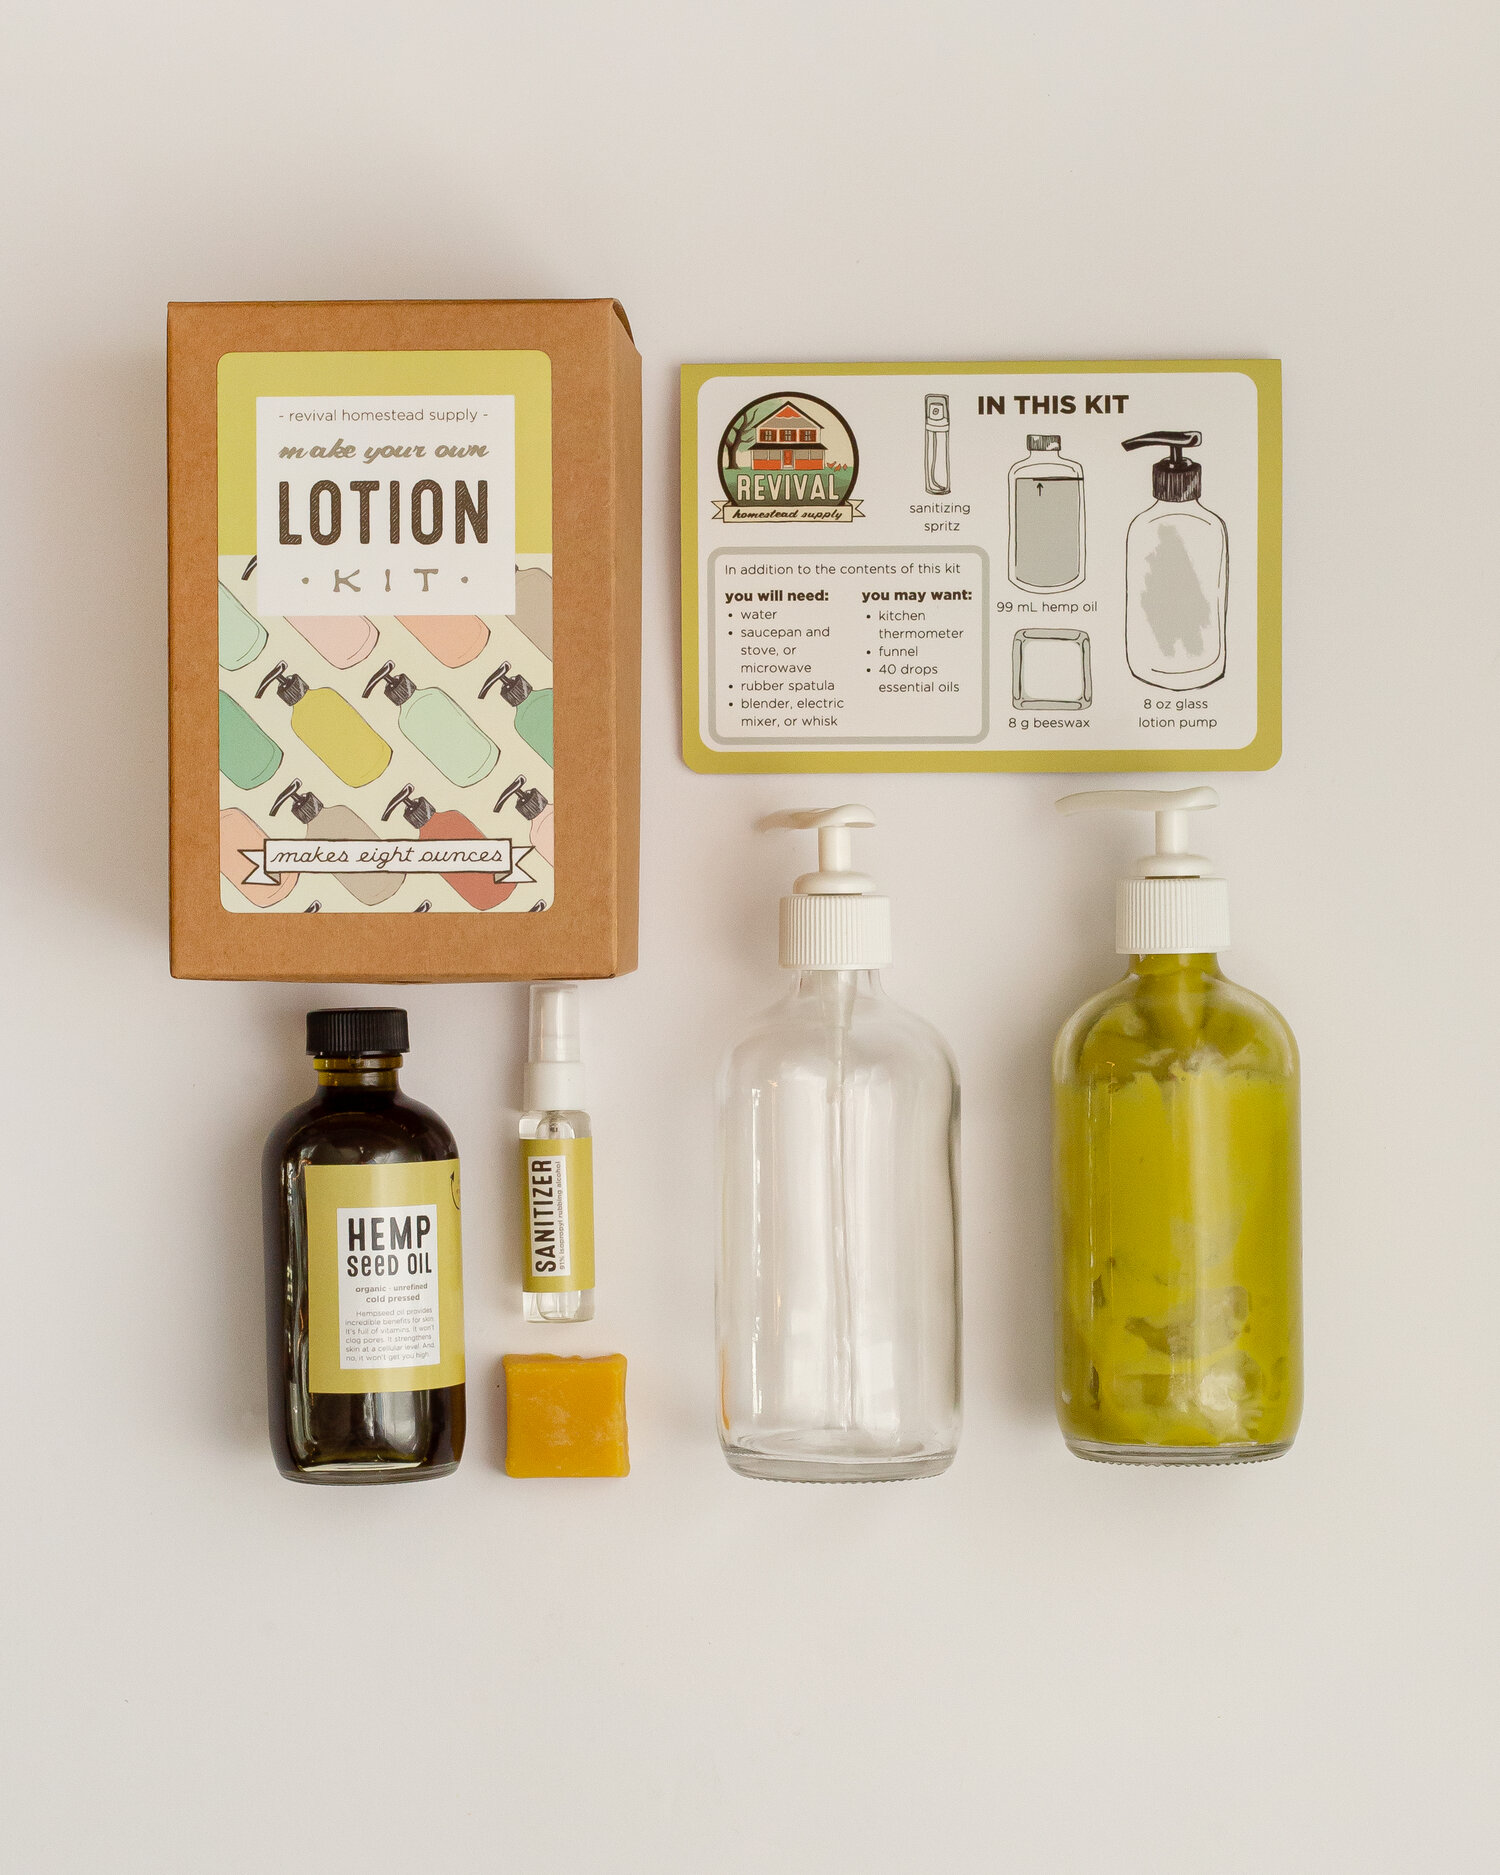 Lotion Kit — Revival Homestead Supply